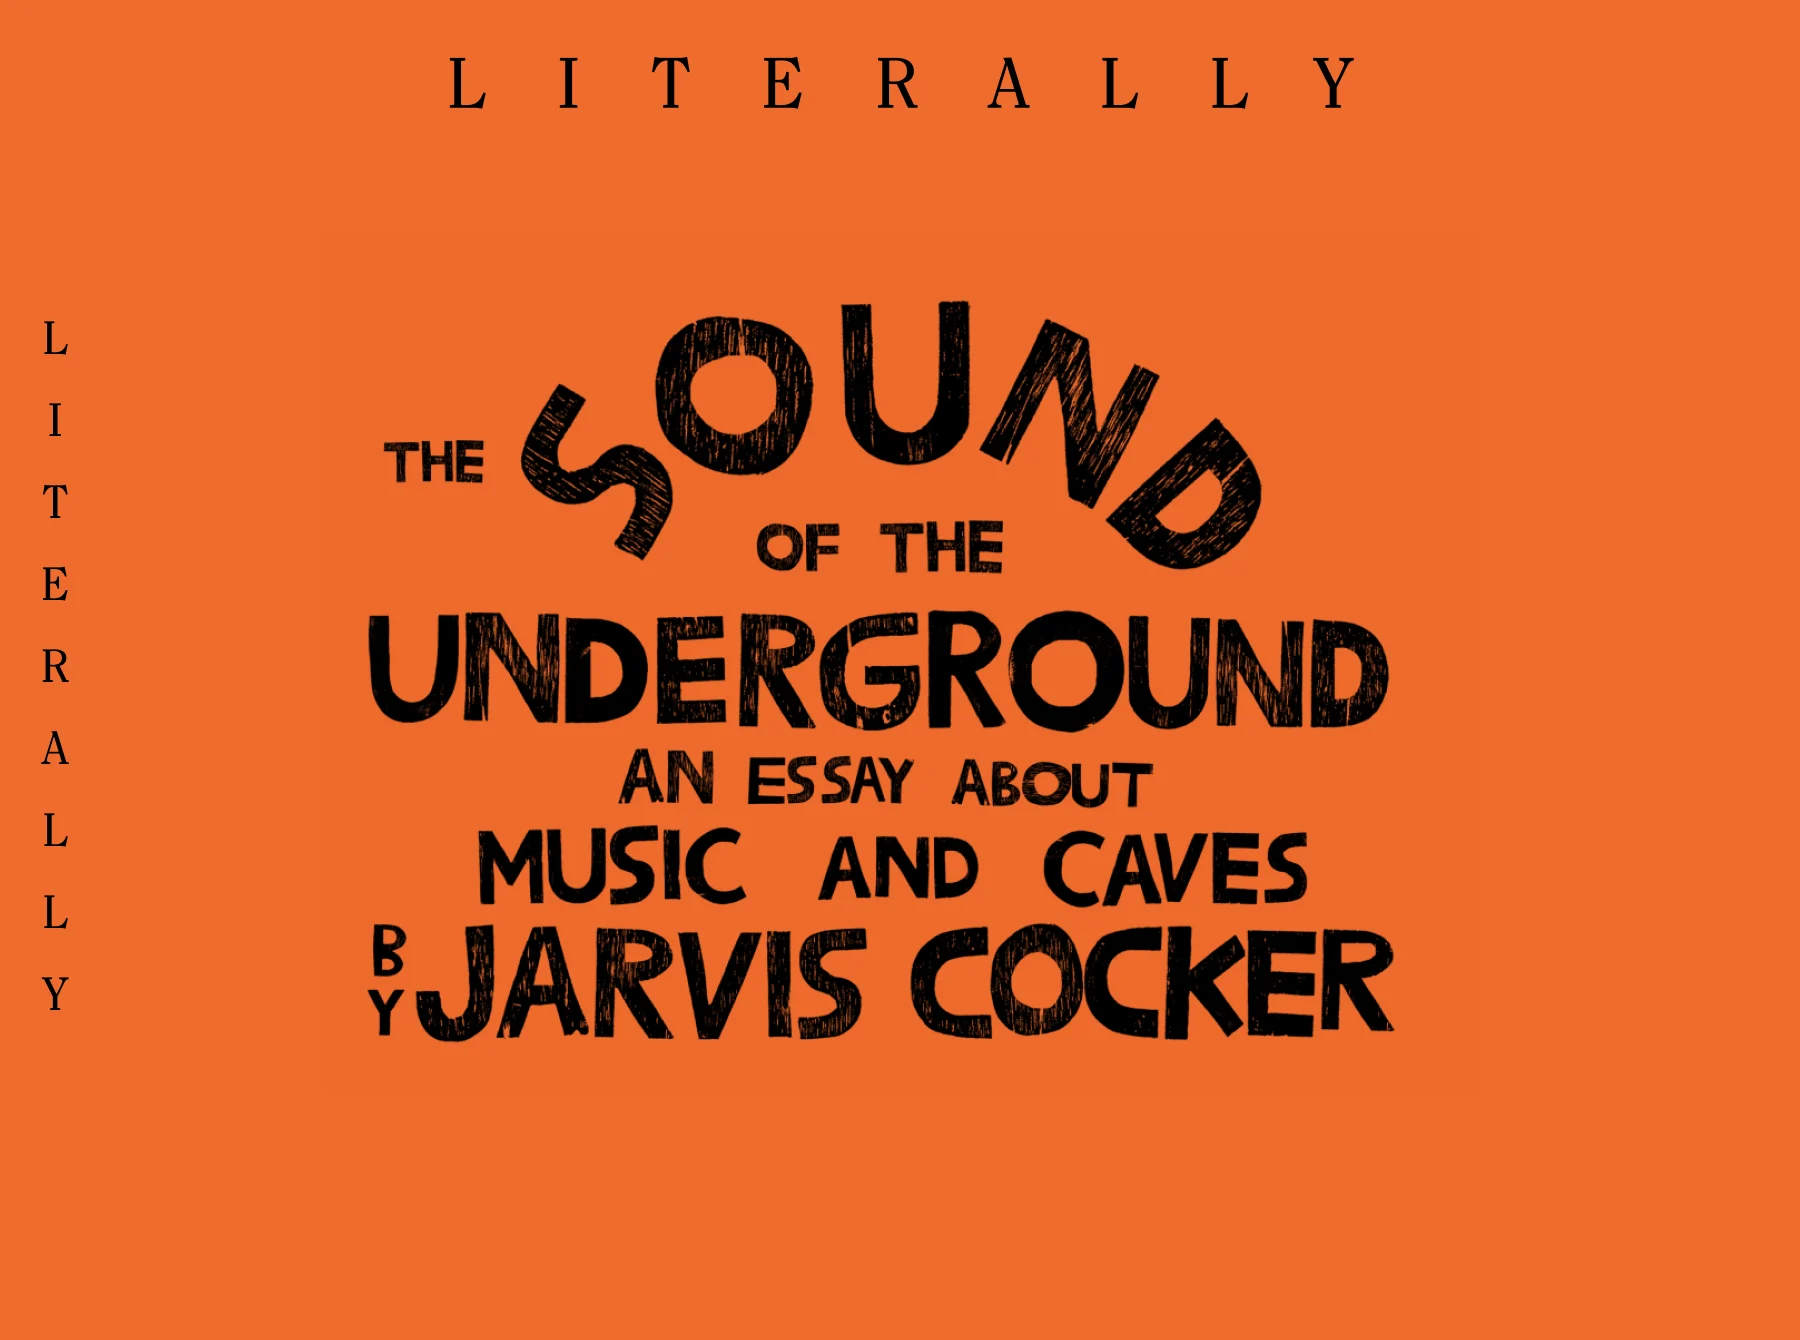 The Sound of the Underground